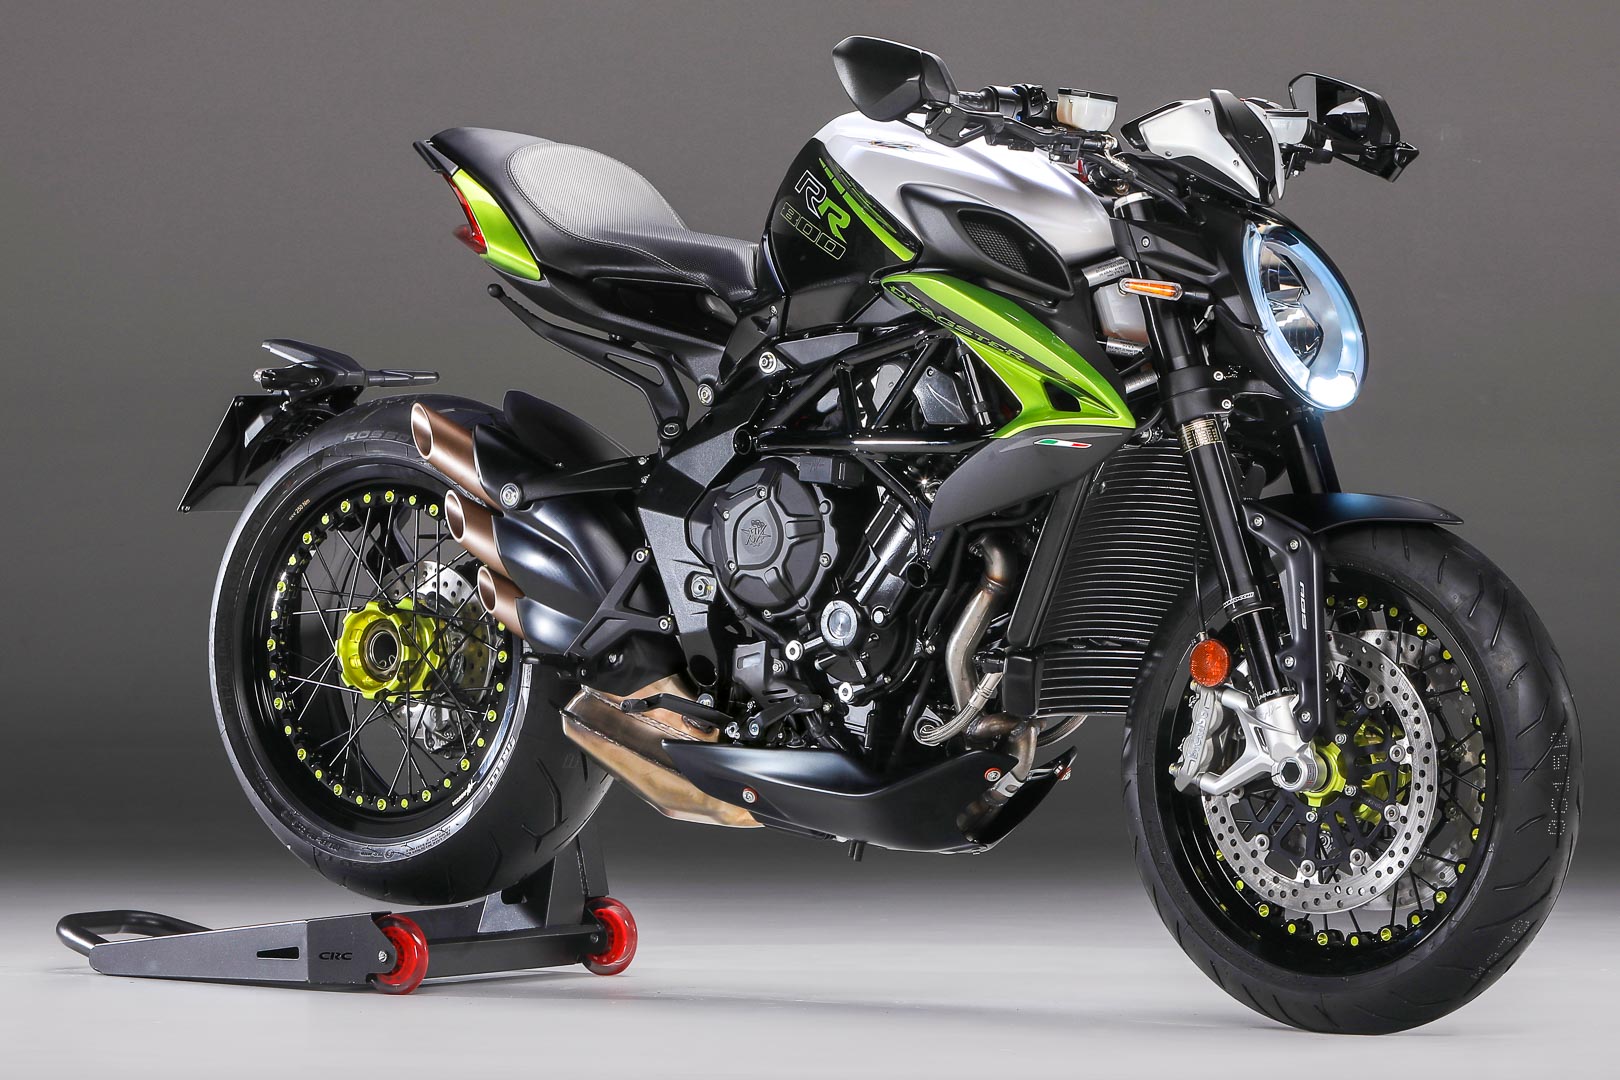 2020-mv-agusta-dragster-800-rr-scs-first-look-sport-motorcycles-quickshifter-autoclutch-6.jpg